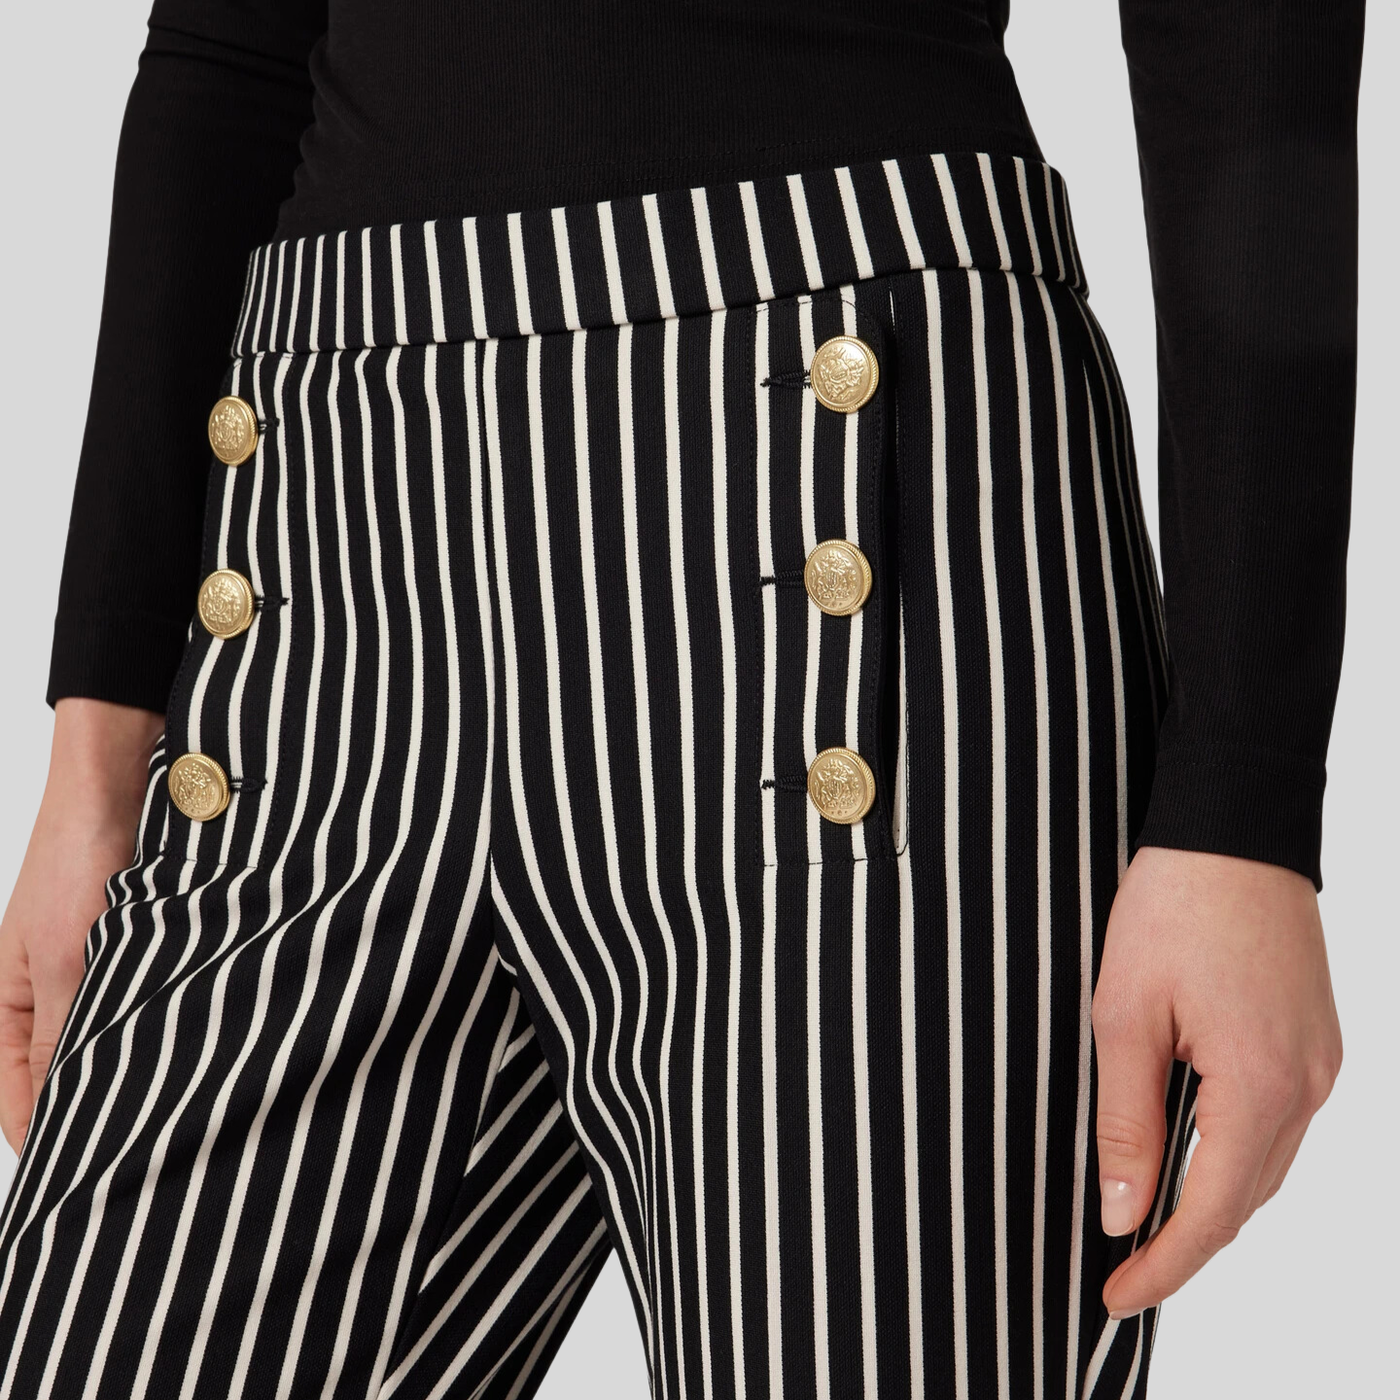 Gotstyle Fashion - Seductive Pants Stripe Jersey Kick Flare Pants - Dark Navy